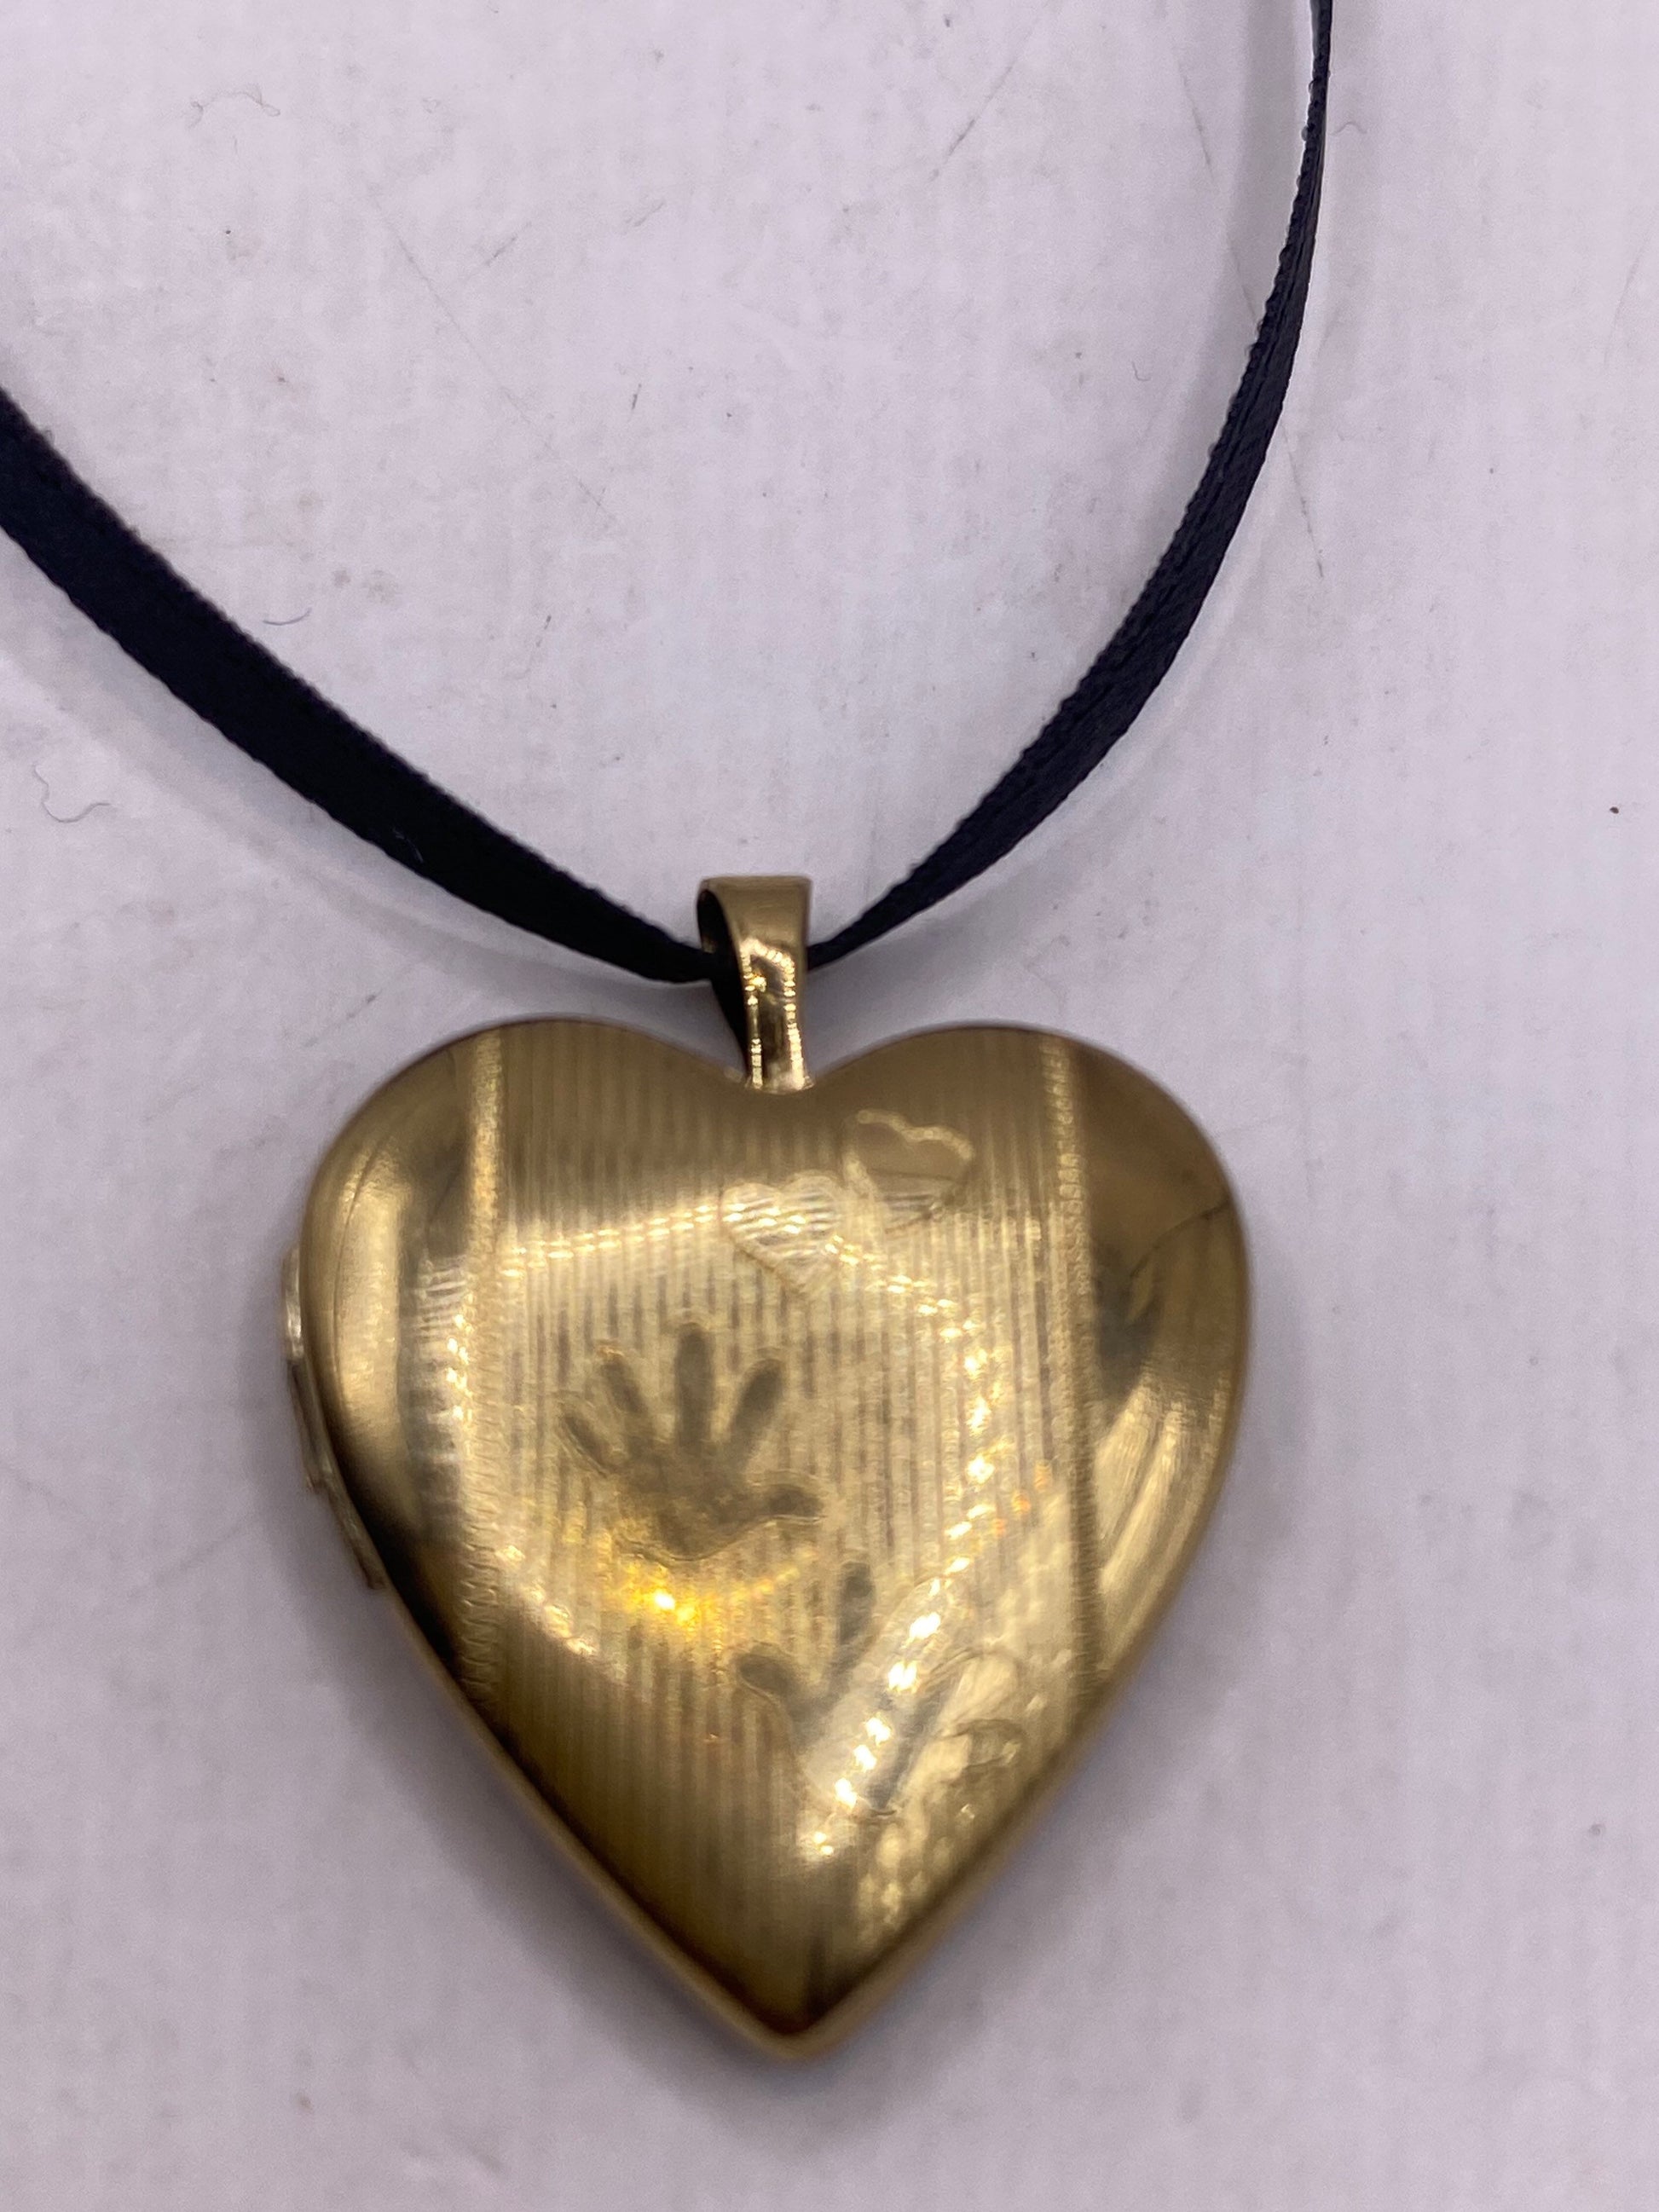 Vintage Gold Locket | Tiny Heart 9k Gold Filled Pendant Photo Memory Charm Engraved Tiny Hands Hearts | Choker Necklace